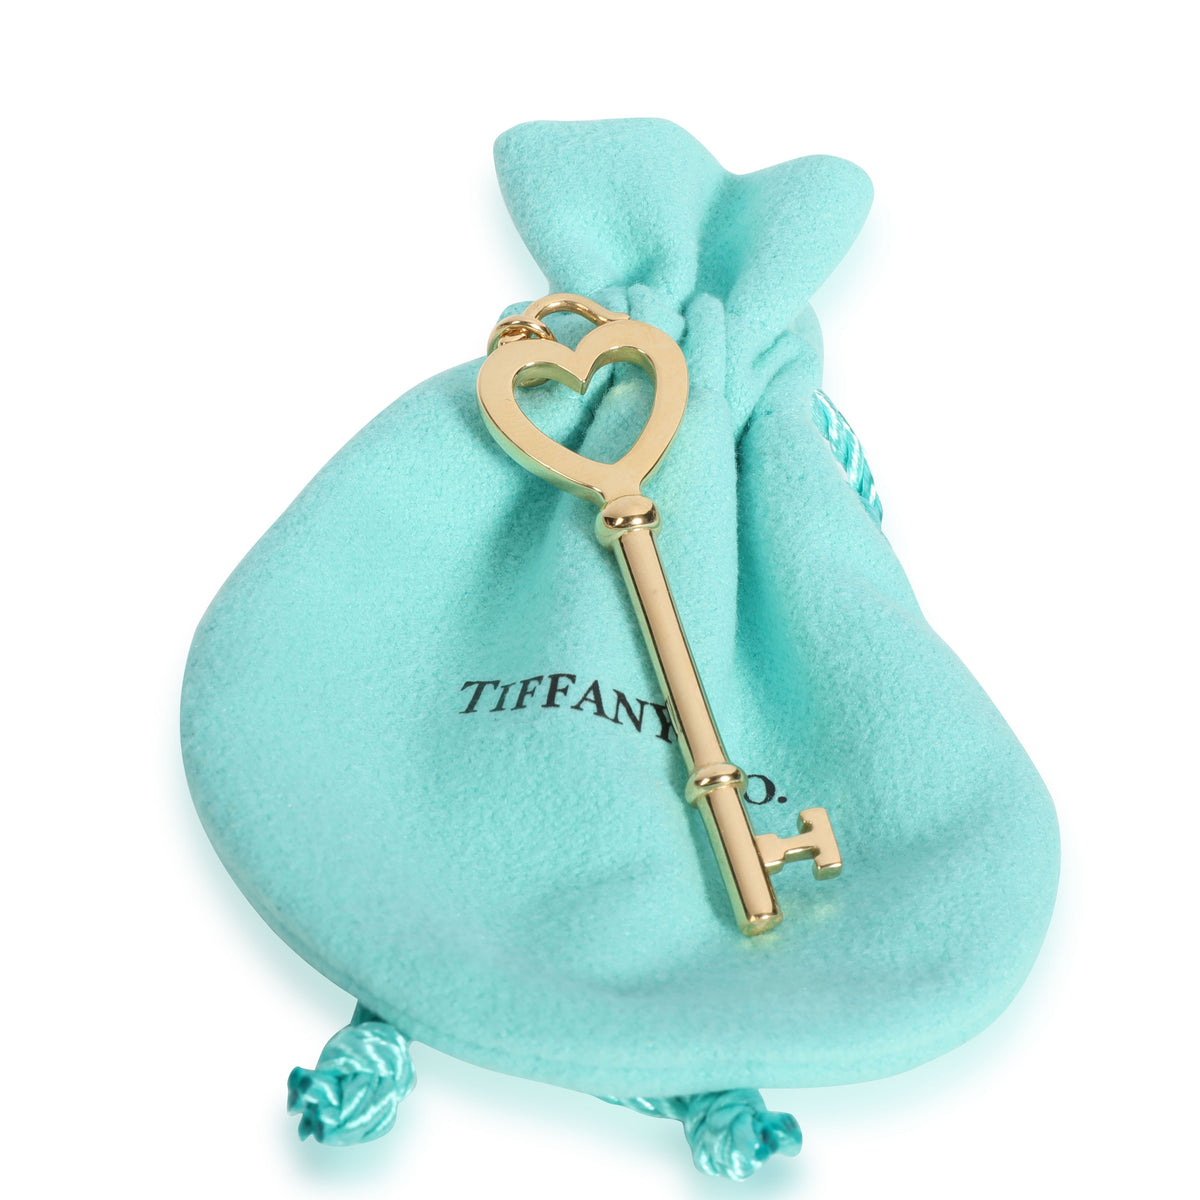 Tiffany & Co. Key Heart Pendant in 18K Yellow Gold